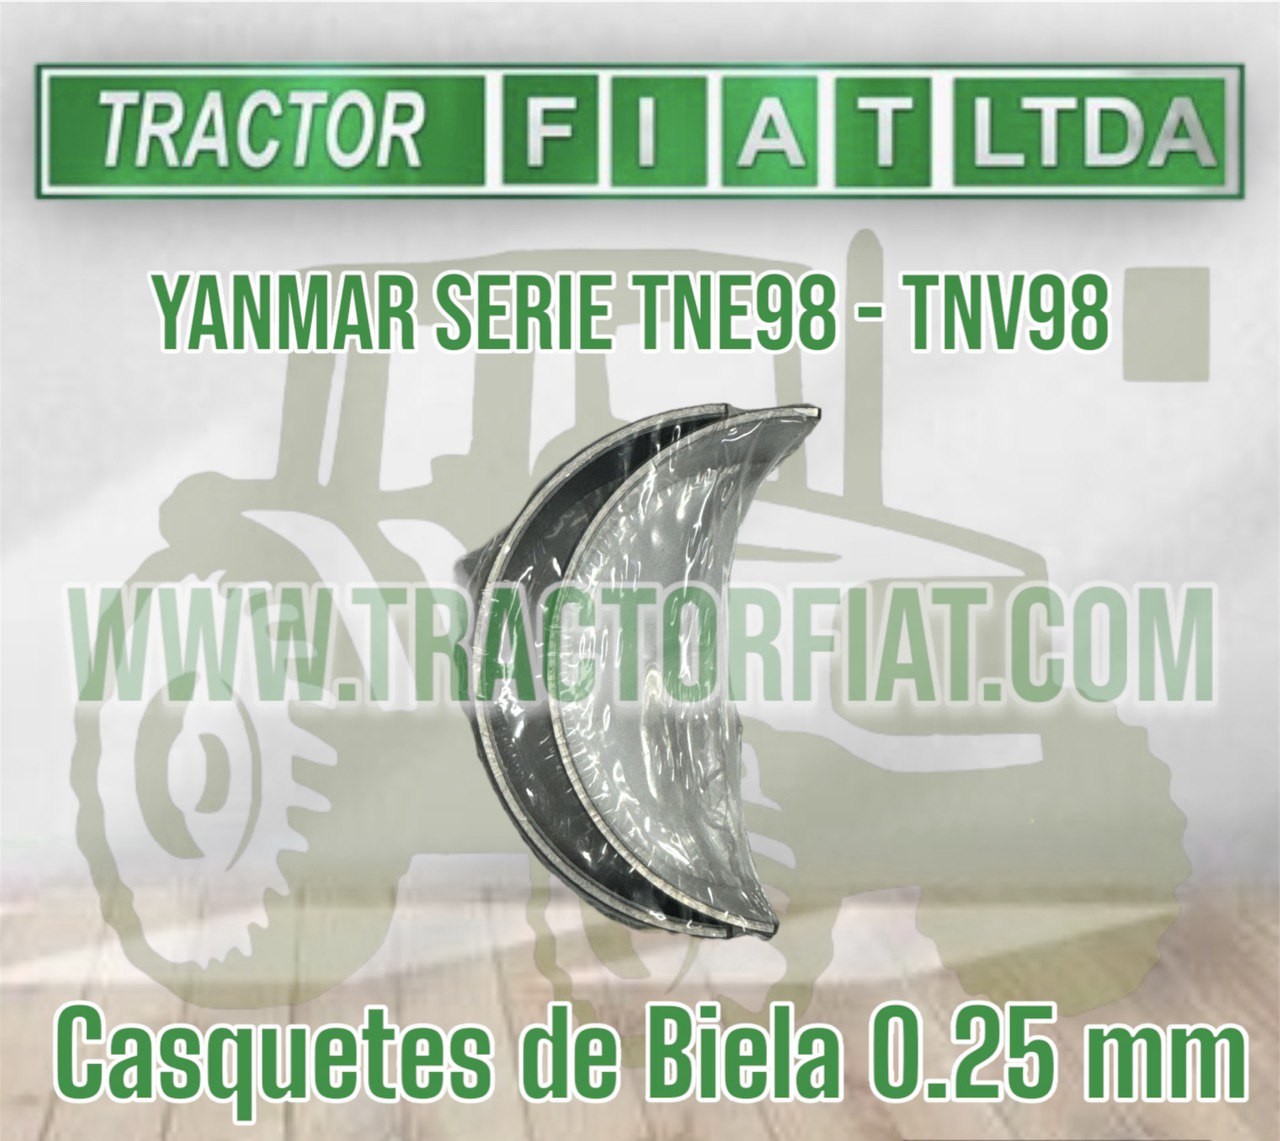 CASQUETES BIELA 0.25mm - MOTOR YANMAR SERIES TNE98/TNV98